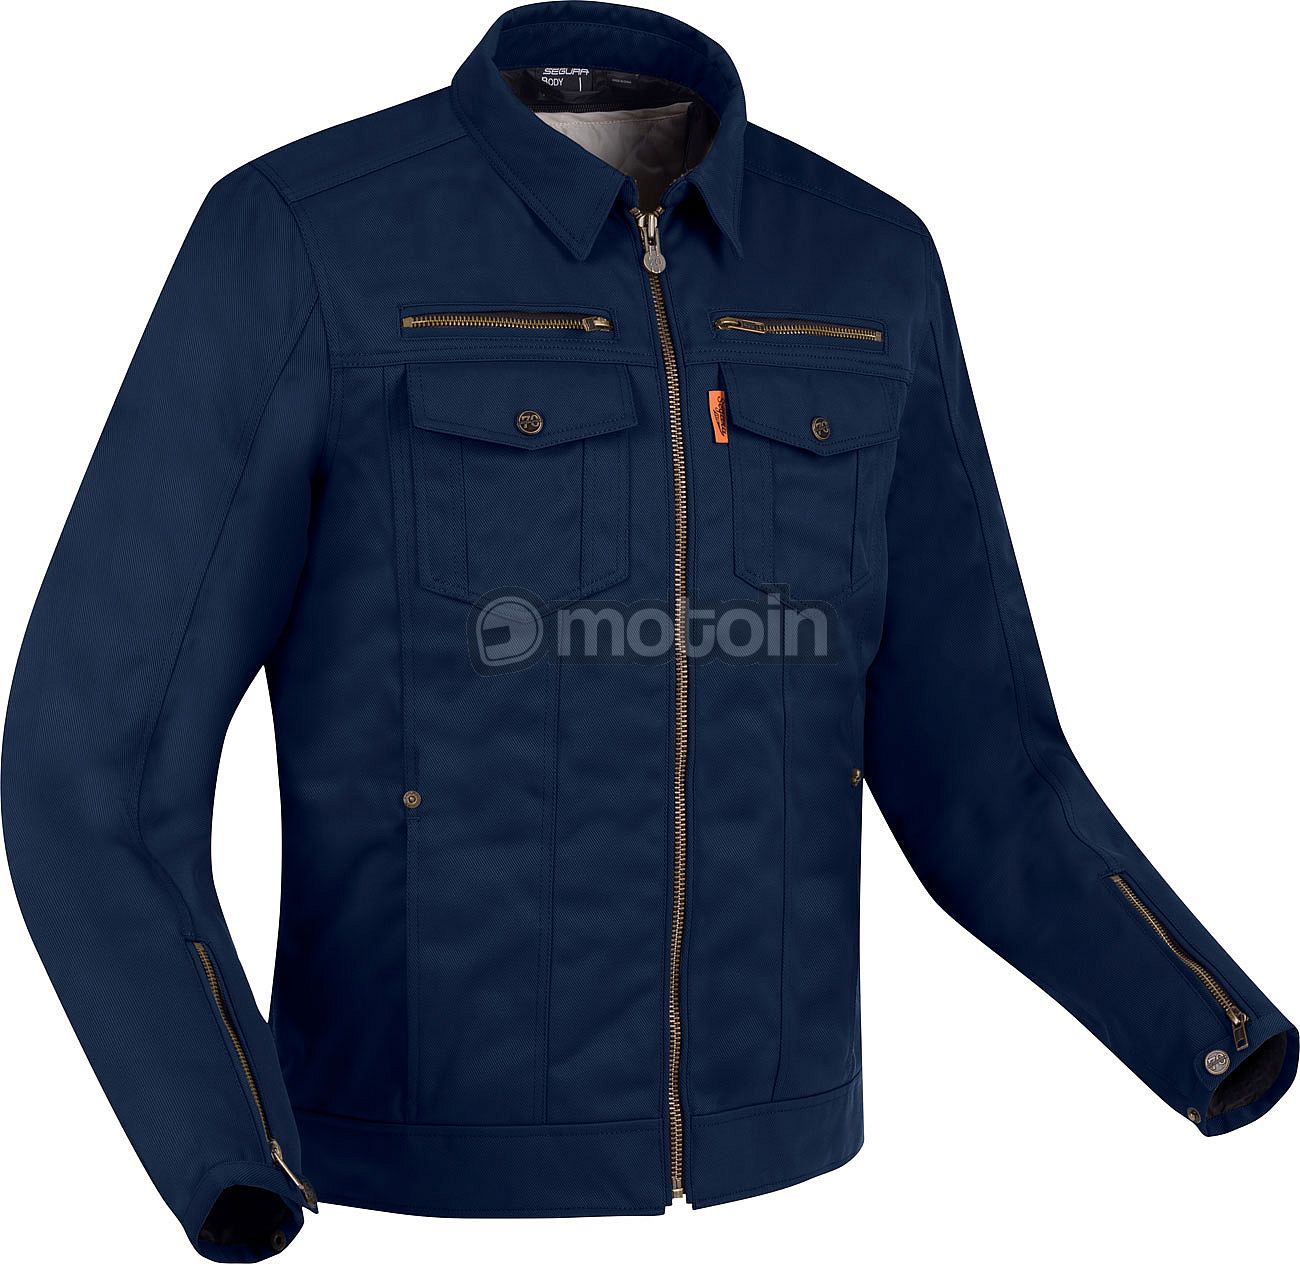 Segura Patrol, shirt/textile jacket